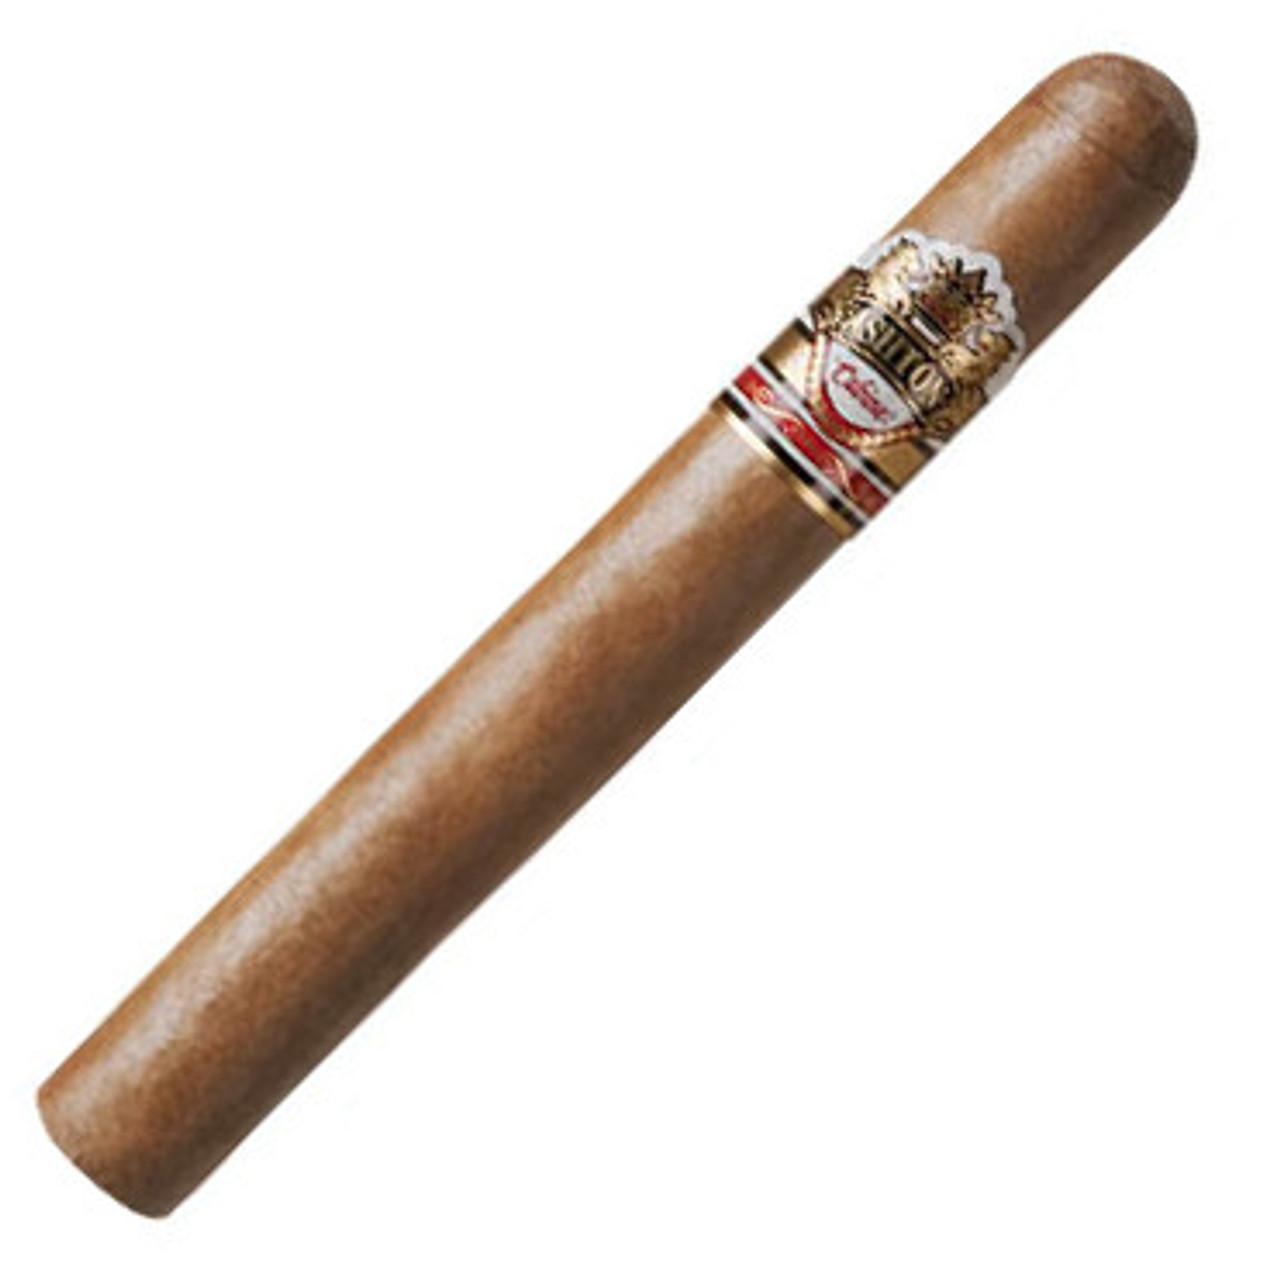 Ashton Cabinet No. 7 Cigars - 6 1/4 x 52 (Cedar Chest of 25)